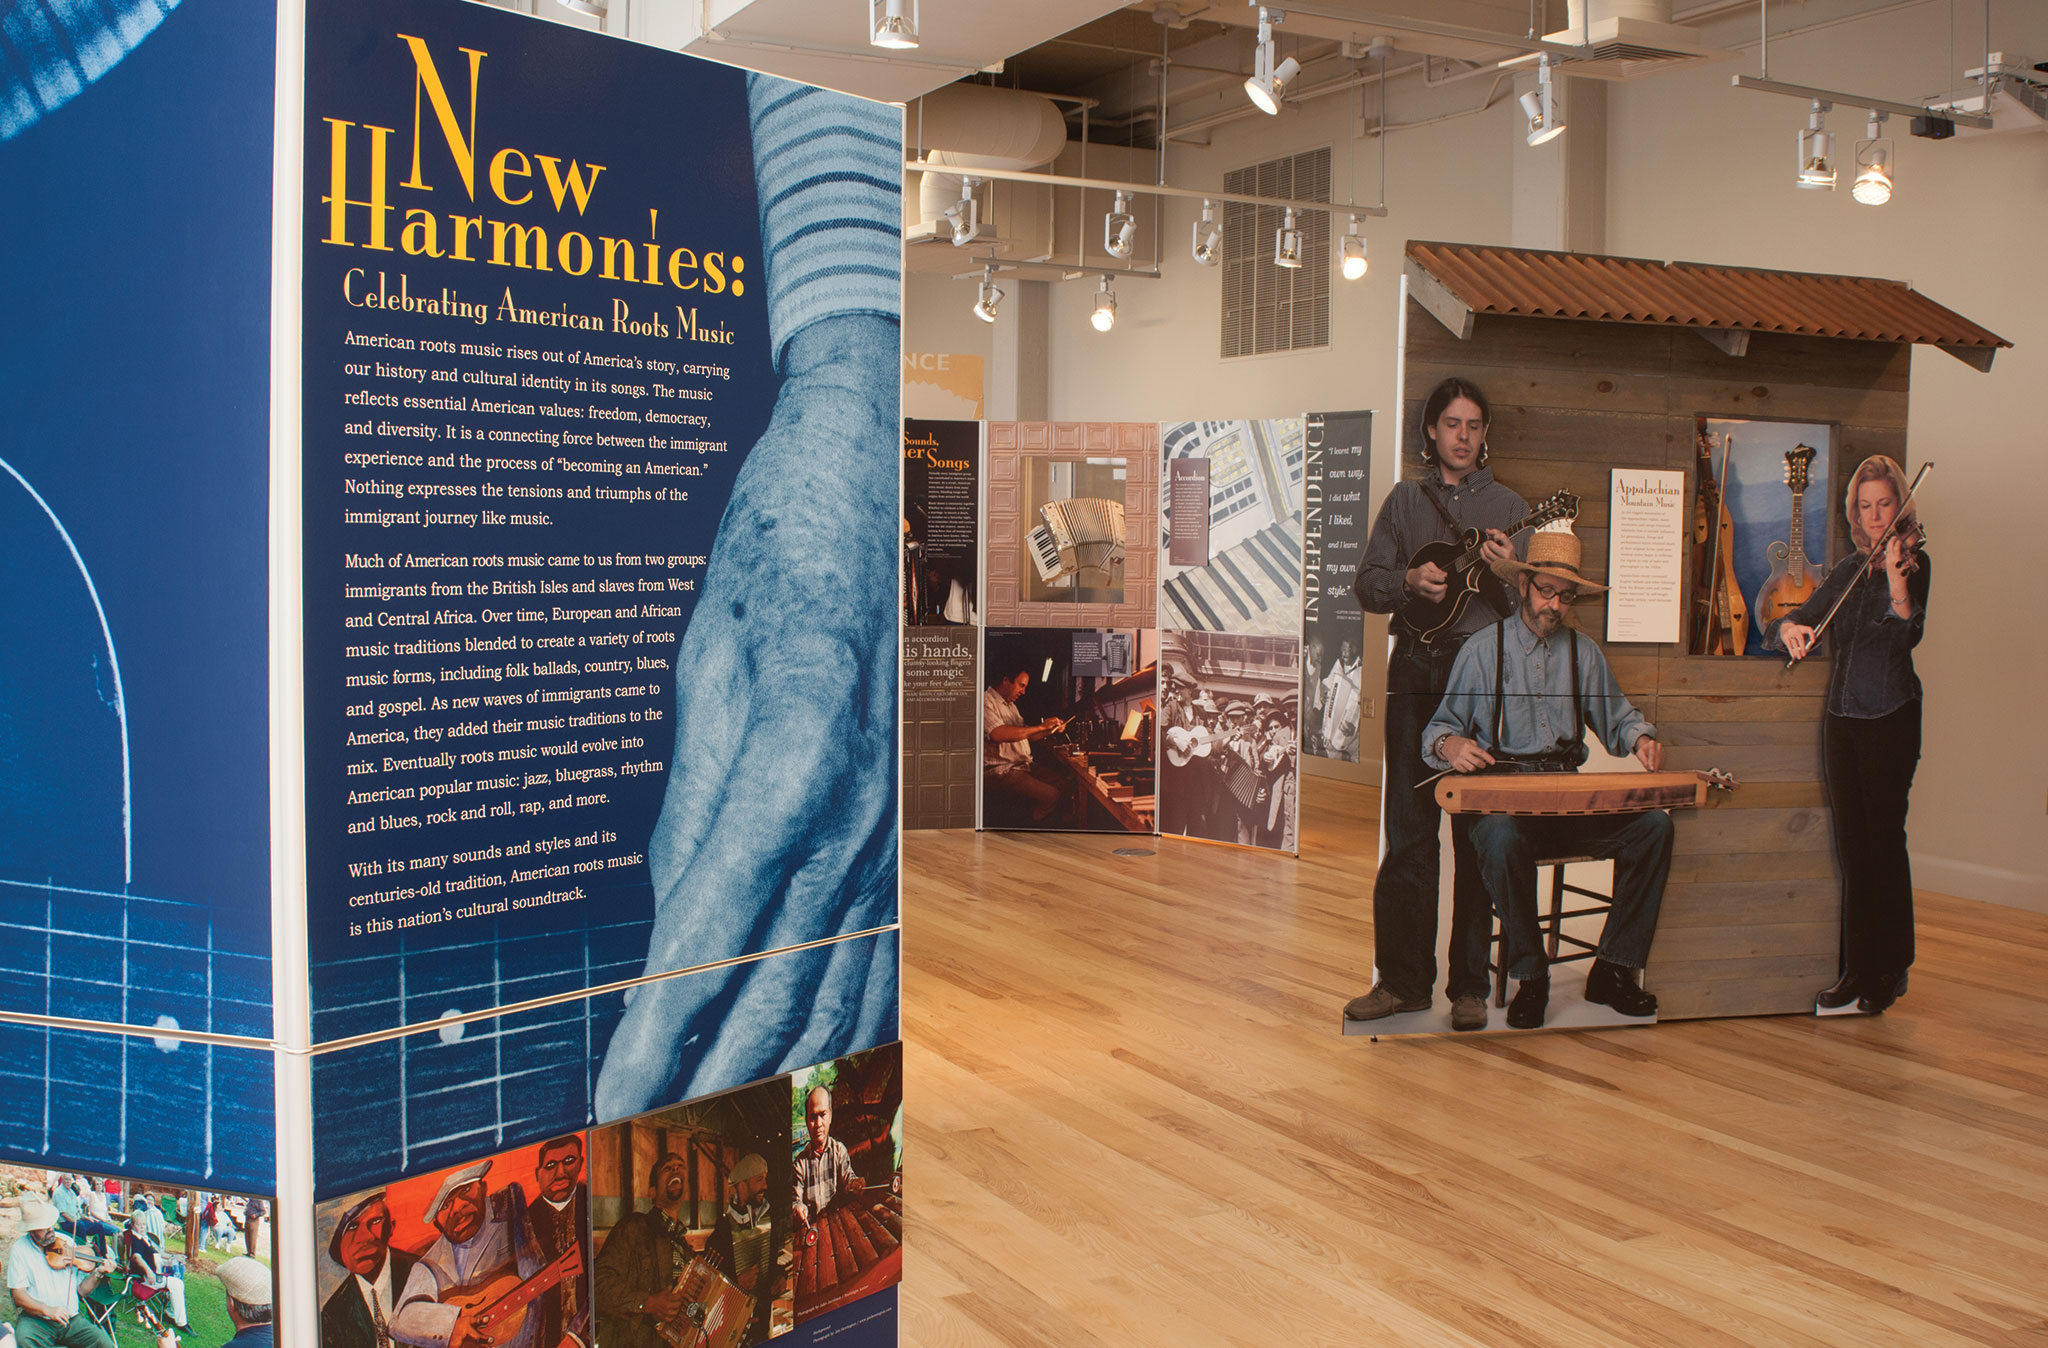 New Harmonies: Celebrating American Roots Music